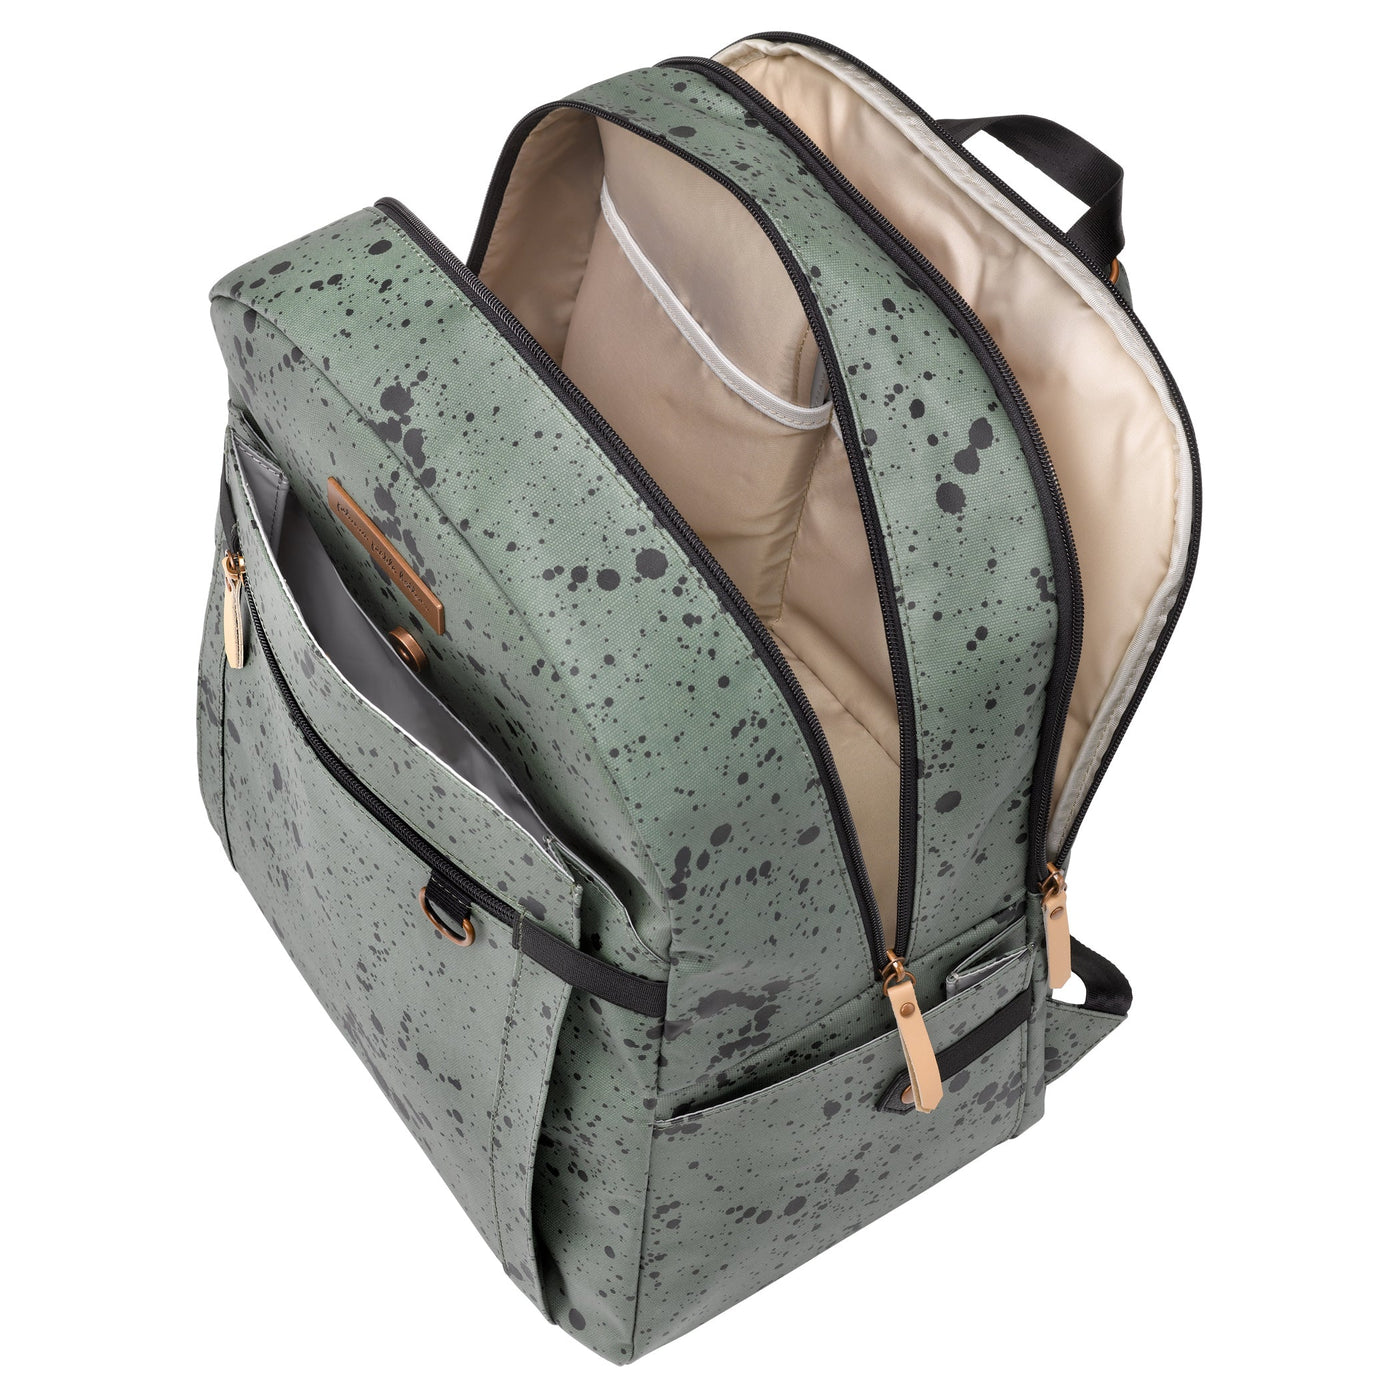 2-in-1 Provisions Breast Pump & Diaper Bag Backpack in Olive Ink Blot-Diaper Bags-Petunia Pickle Bottom